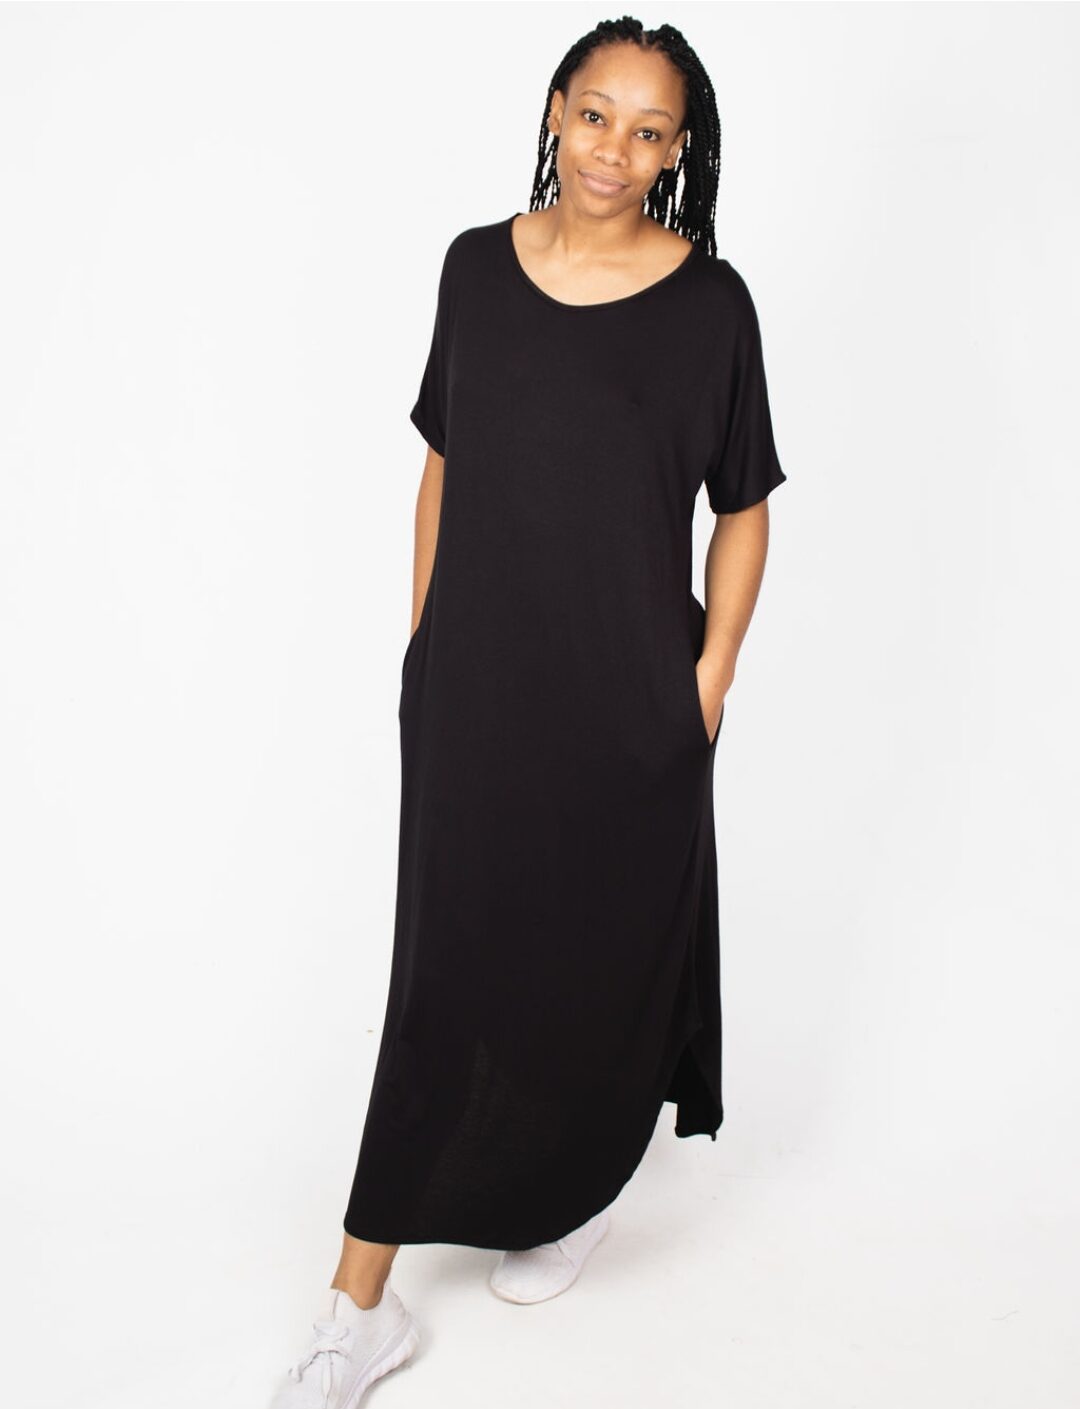 Stylish Black Summer Dress - True North Clothing